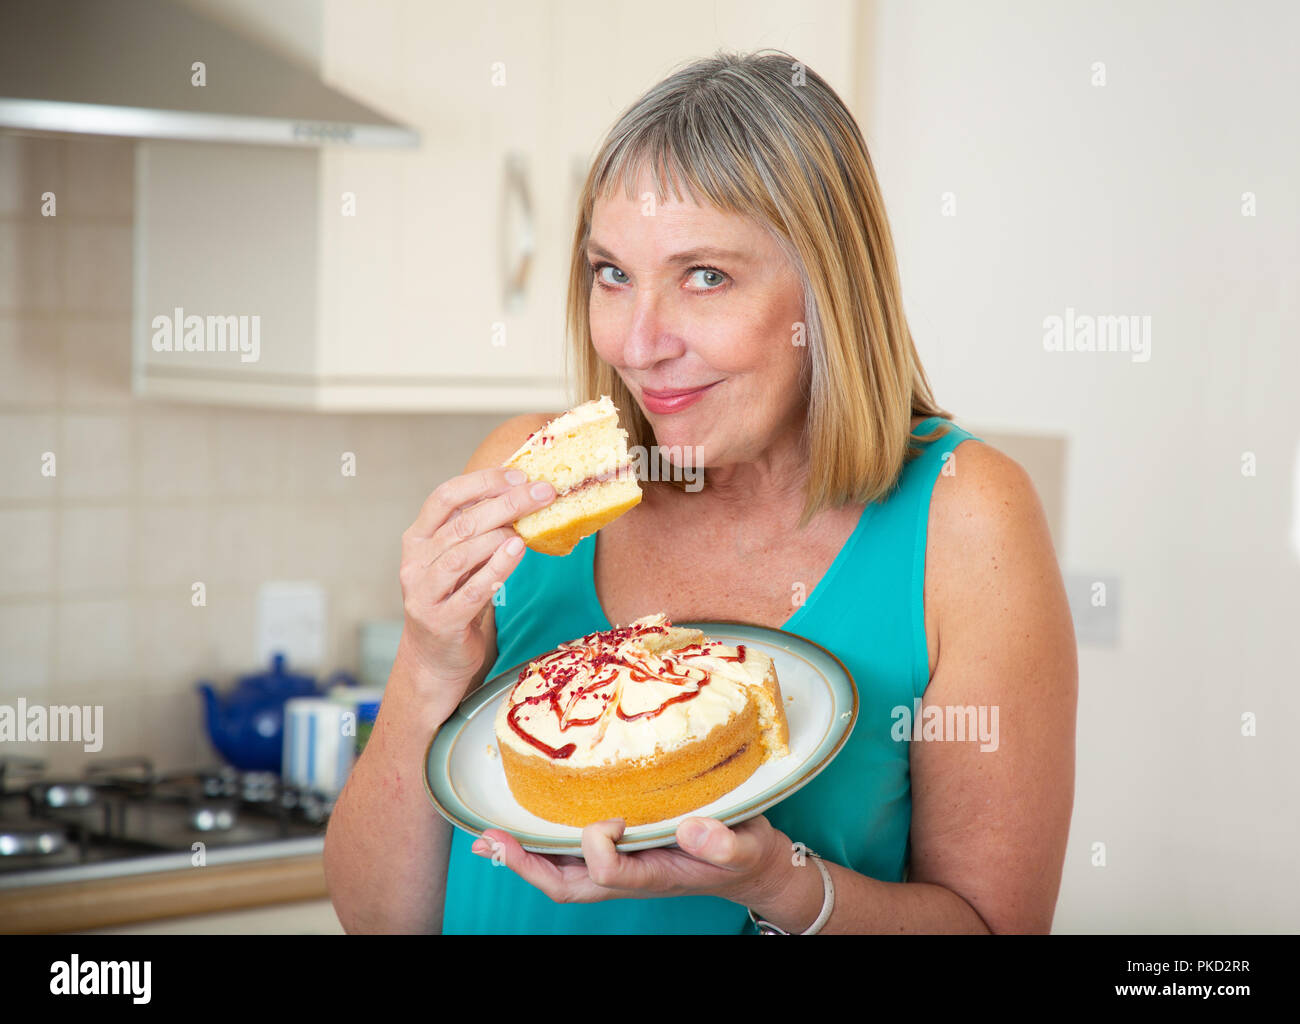 woman eating a cream sponge cake Stock Photo